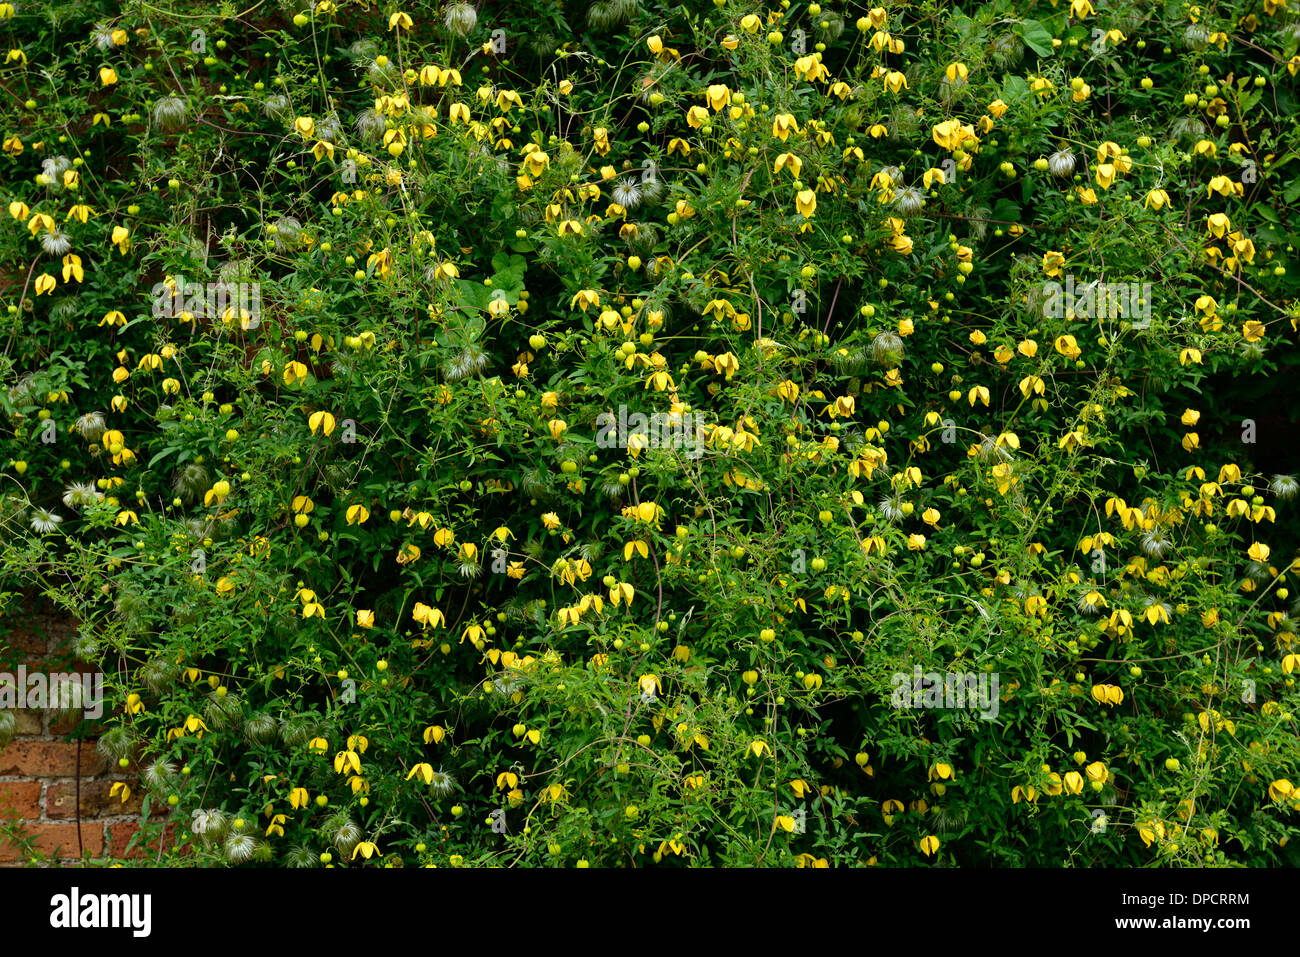 Clematis tangutica vigorosa escalada Escalador subir flor amarilla floración floración planta cubierta de pared Foto de stock